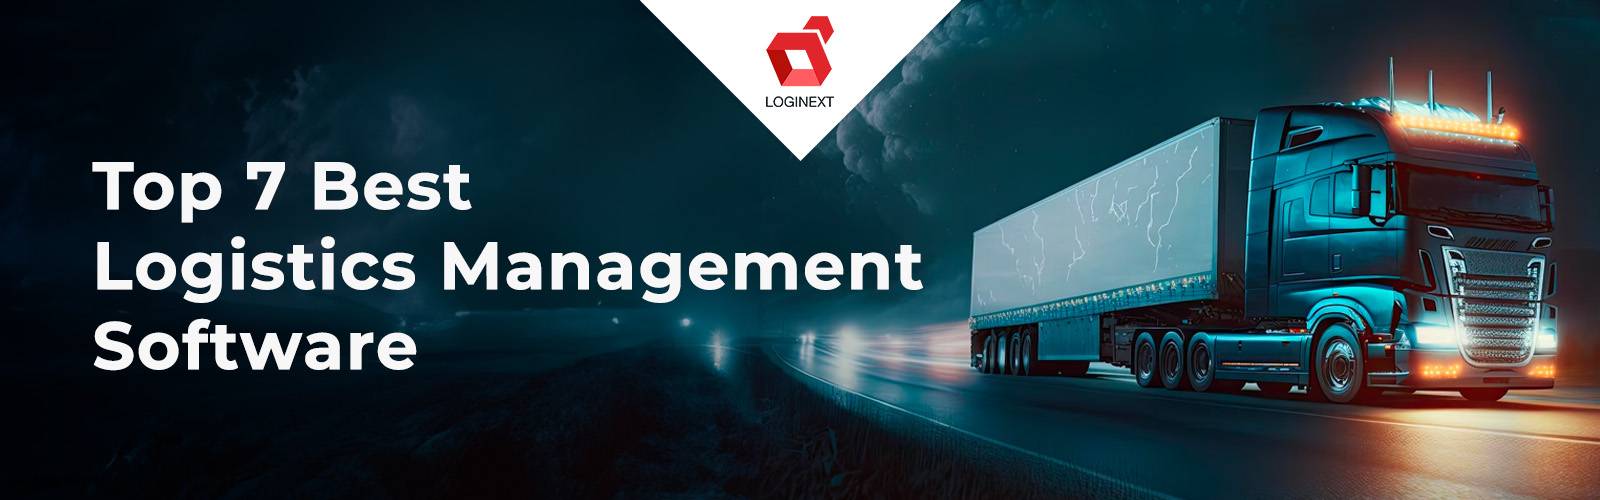 Top 7 Best Logistics Management Software in the Market